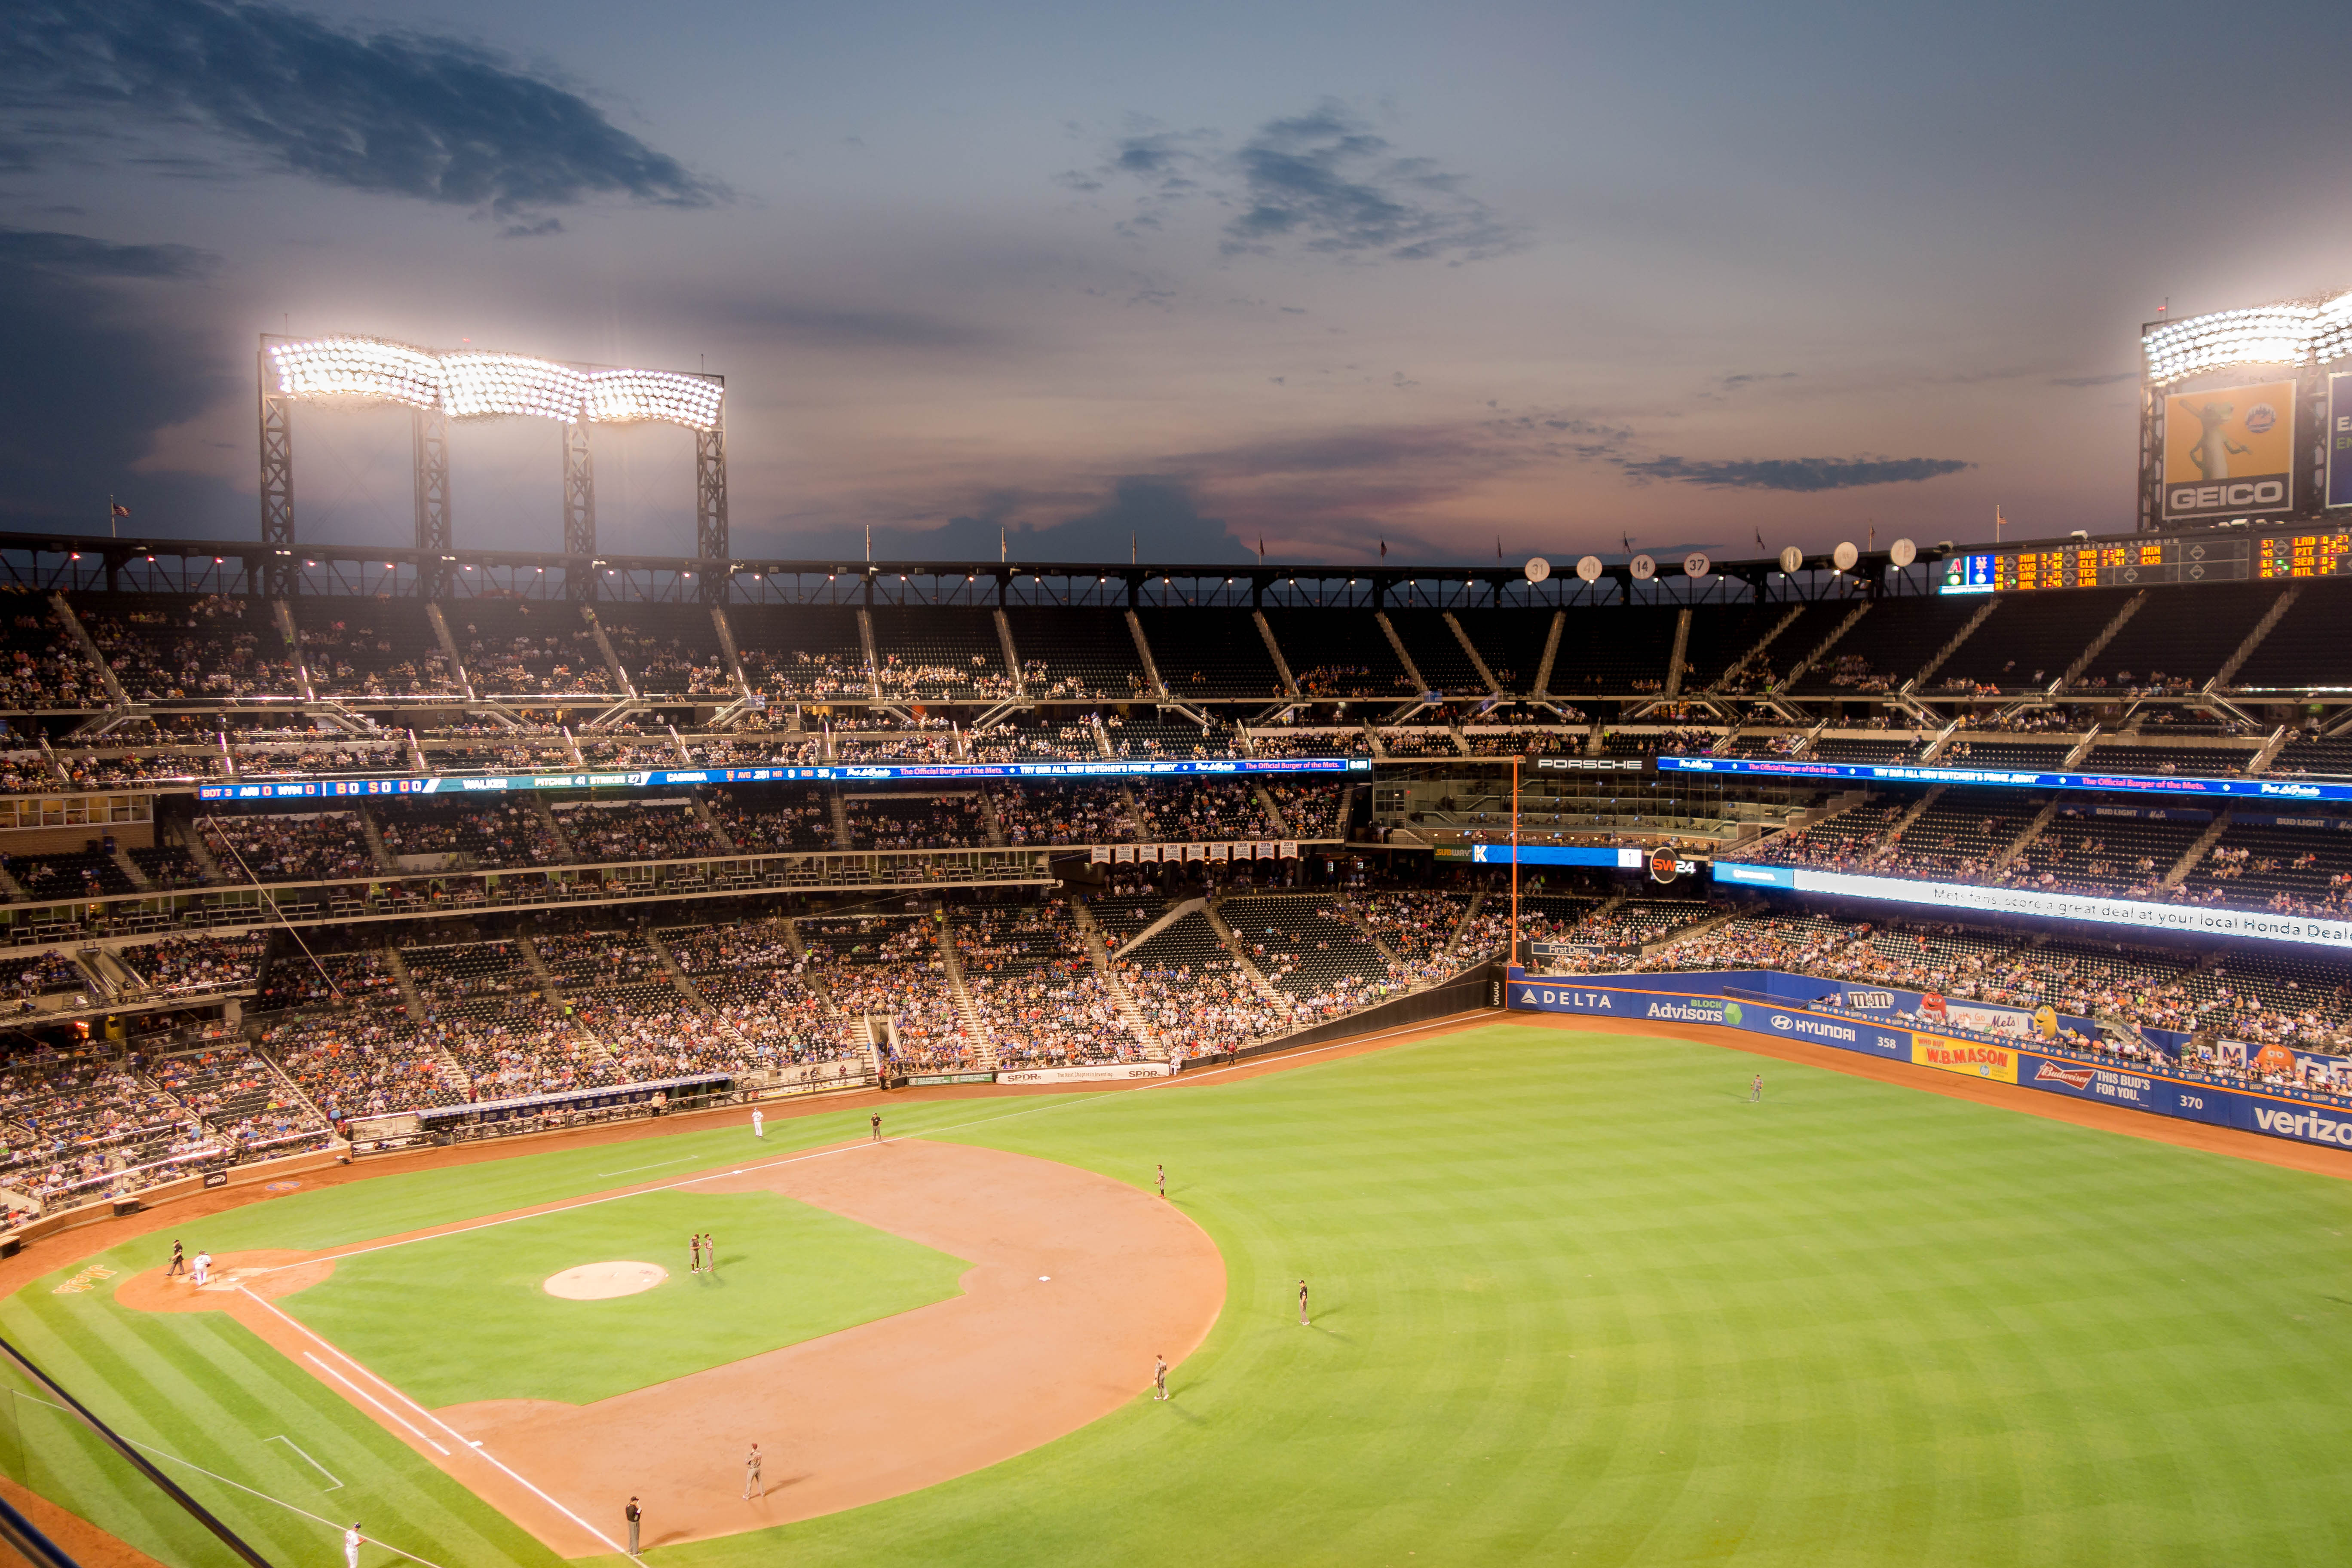 Baseballspiel der New York Mets